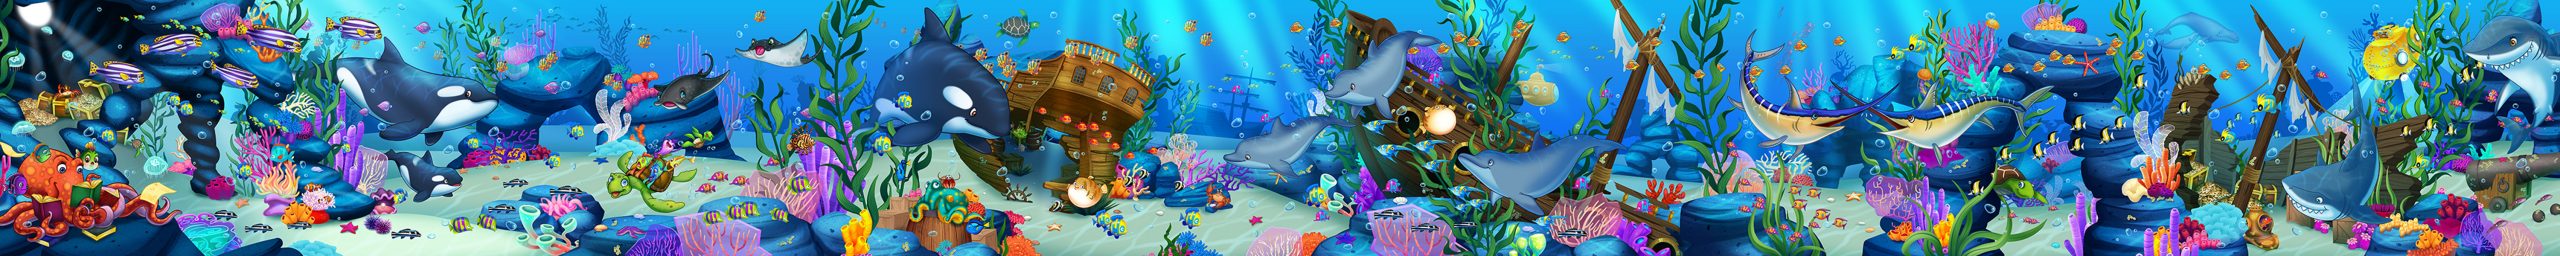 KidsMural-Underwater3